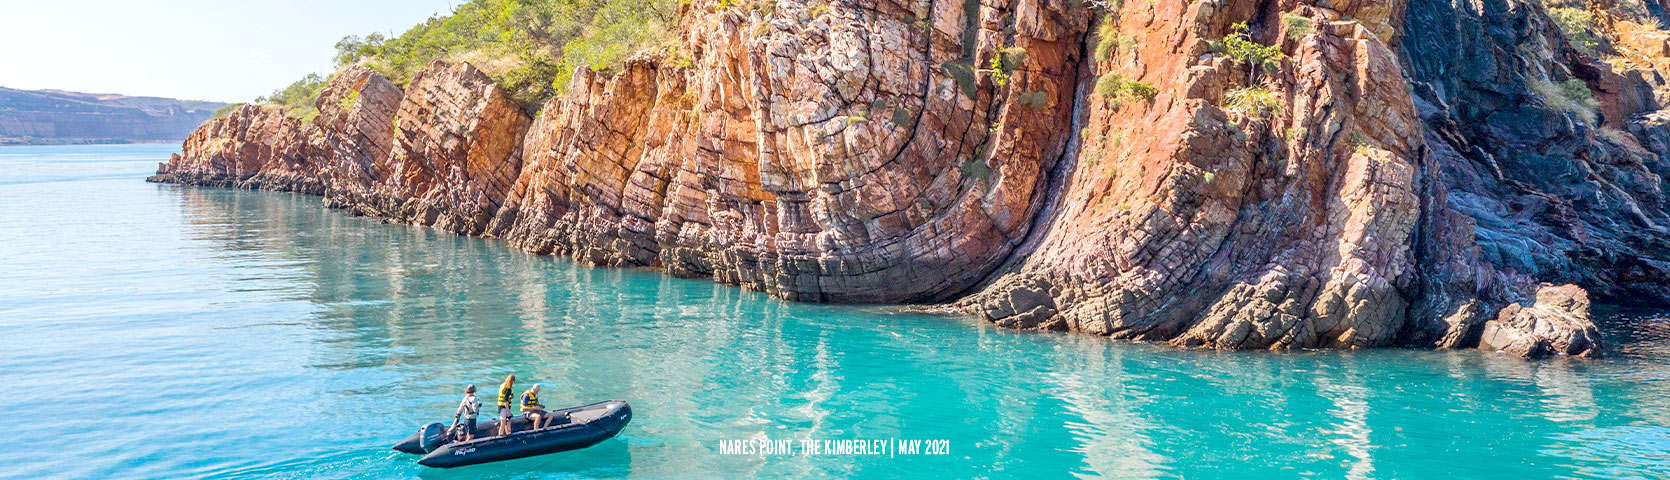 Nares-Point,-the-Kimberley-Cruise-Western-Australia